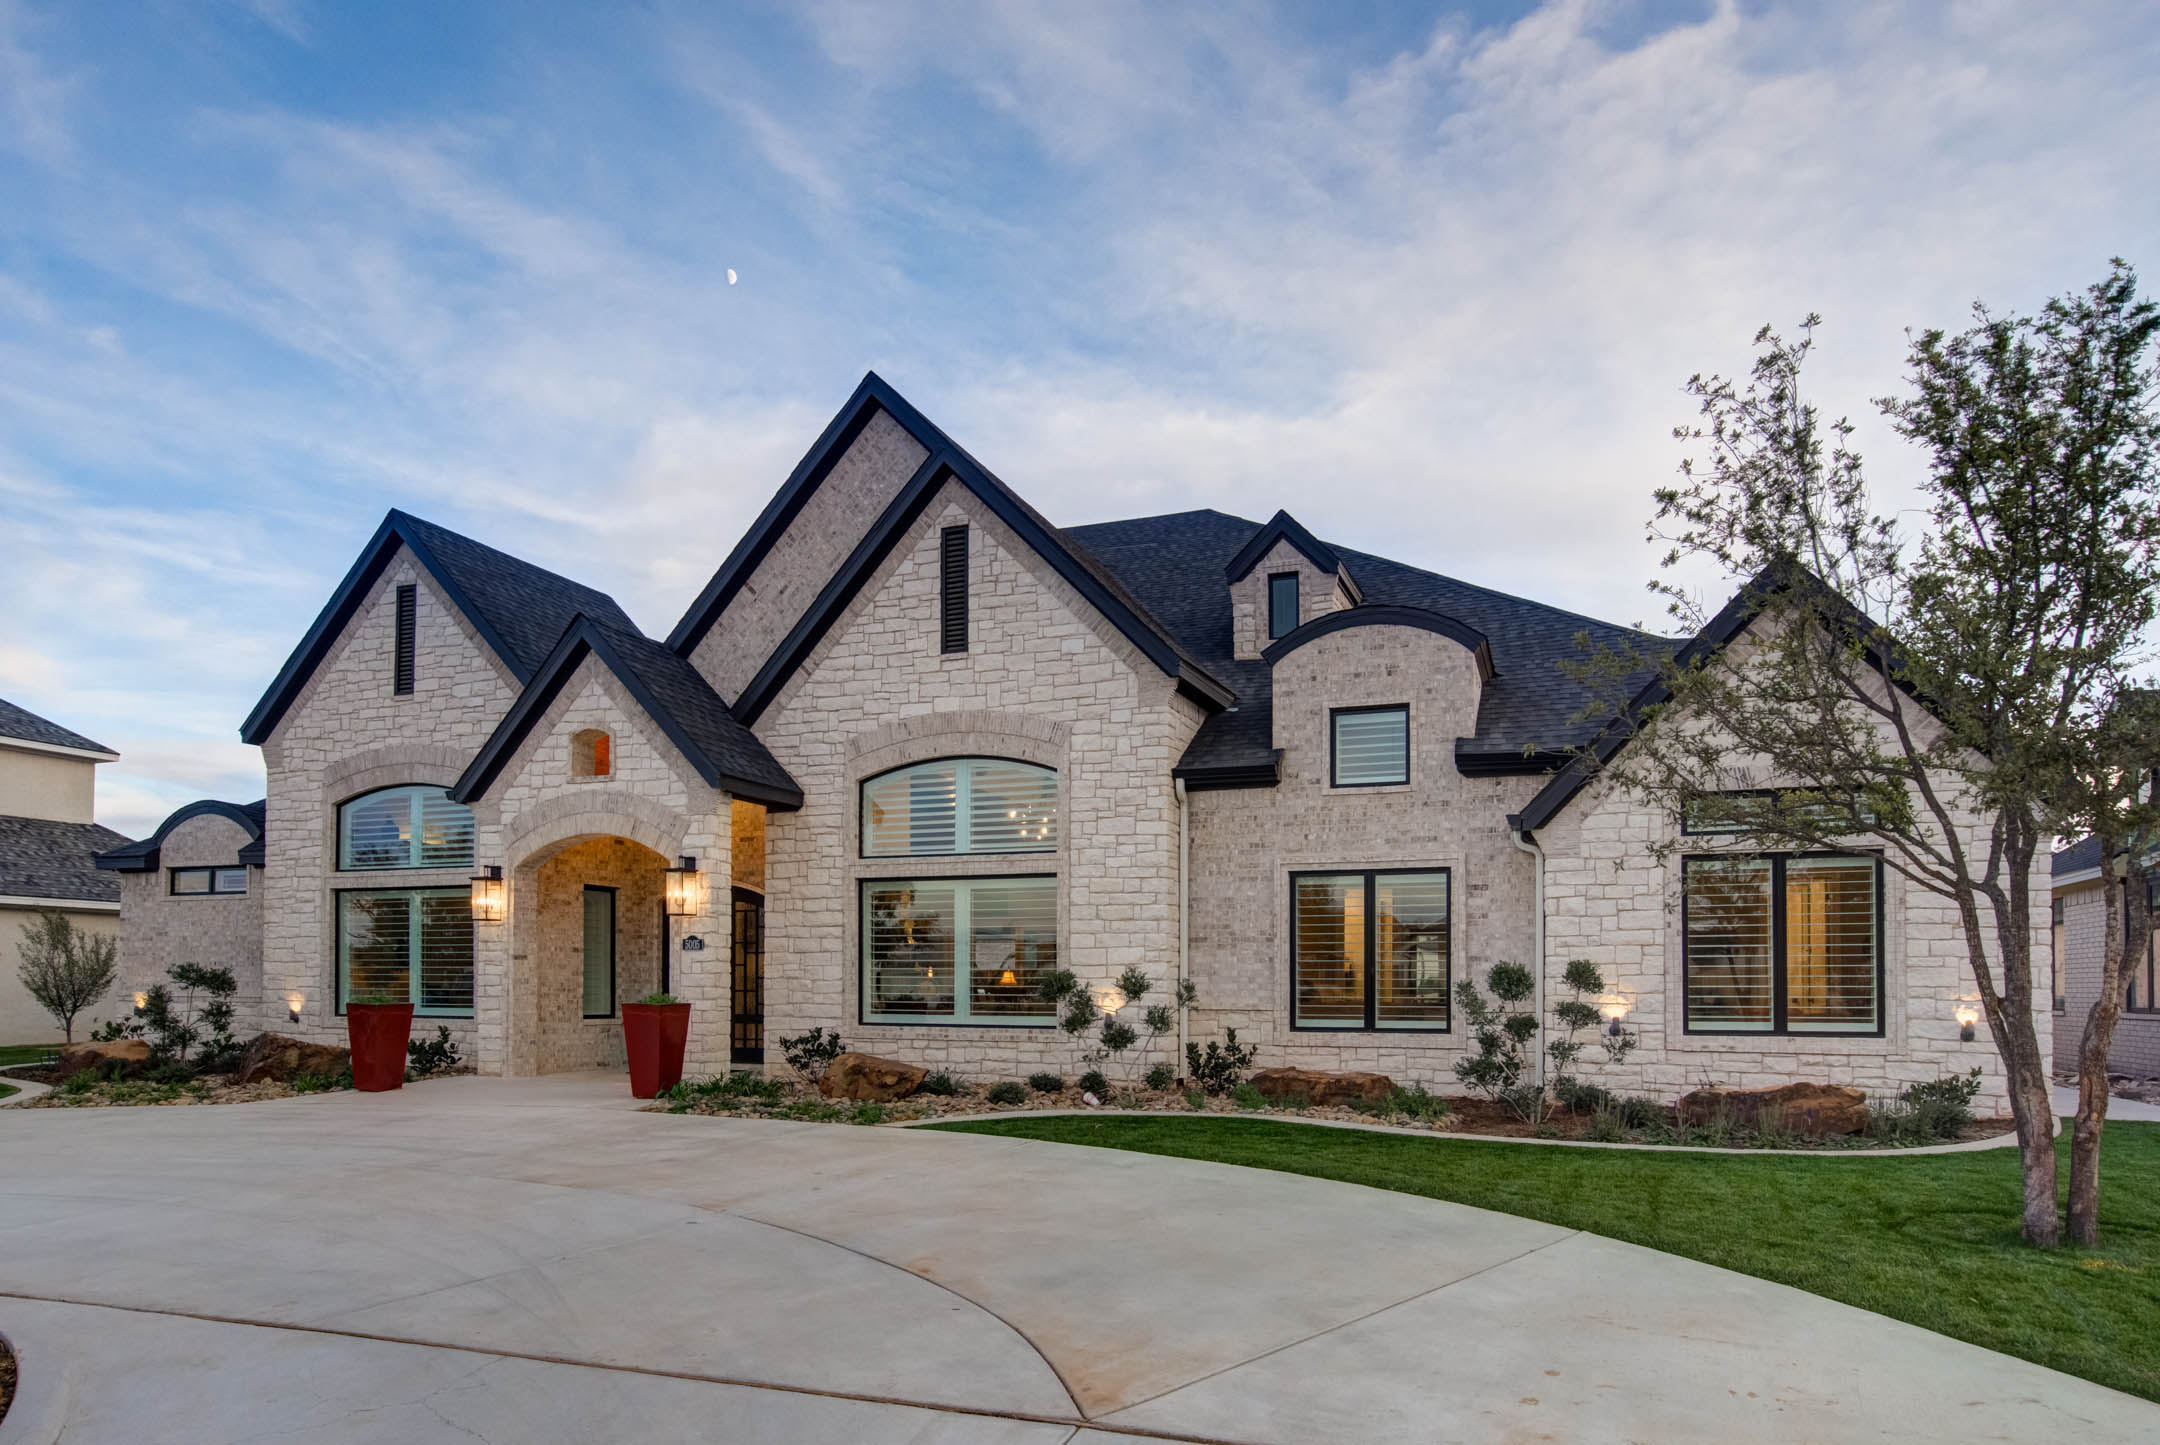 Alternate view of beautiful custom home exterior built in Lubbock, Texas.